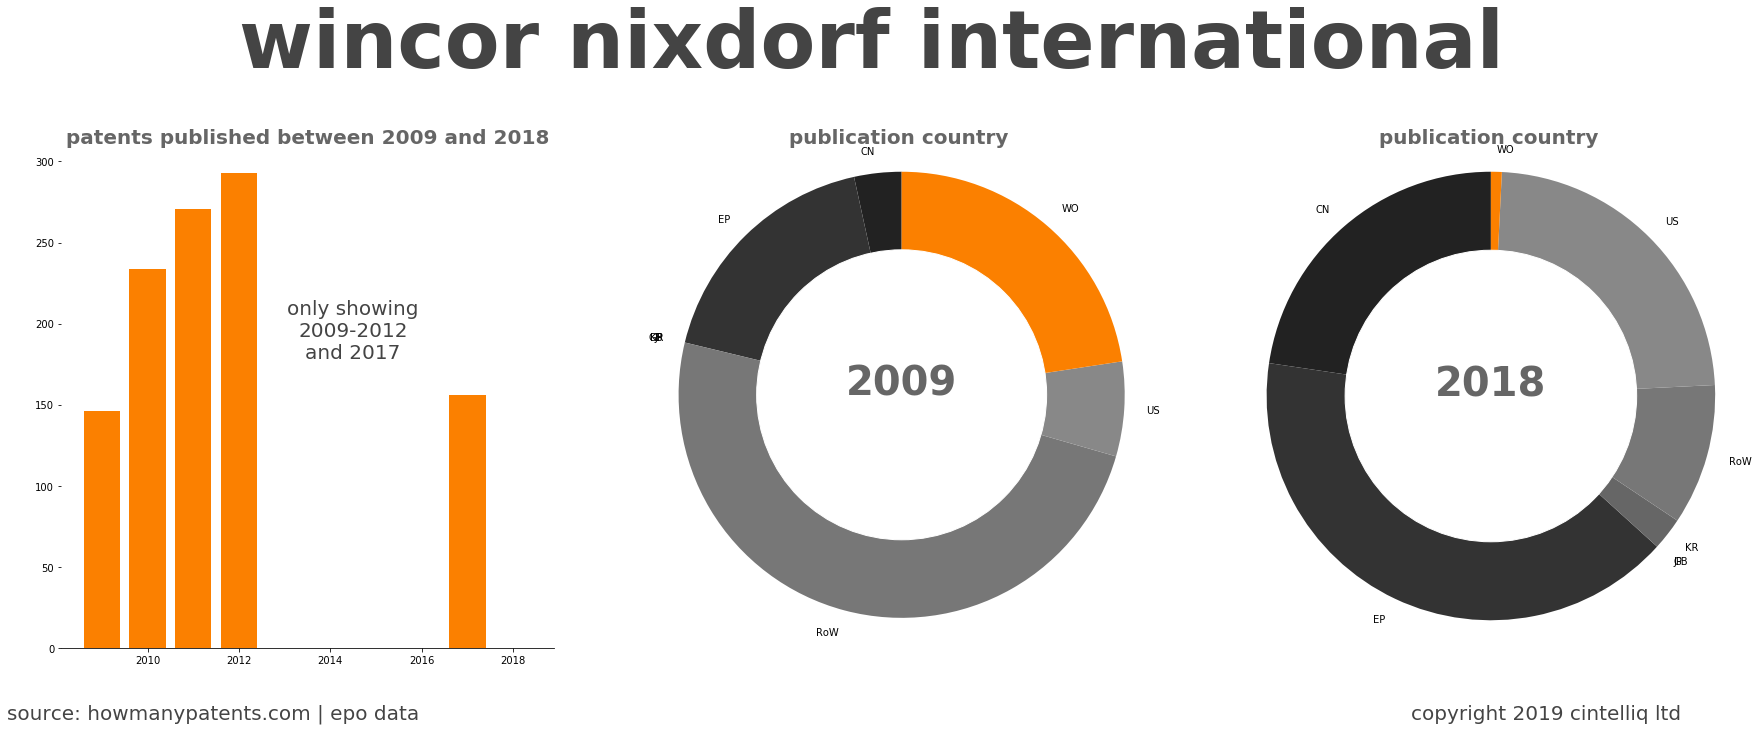 summary of patents for Wincor Nixdorf International